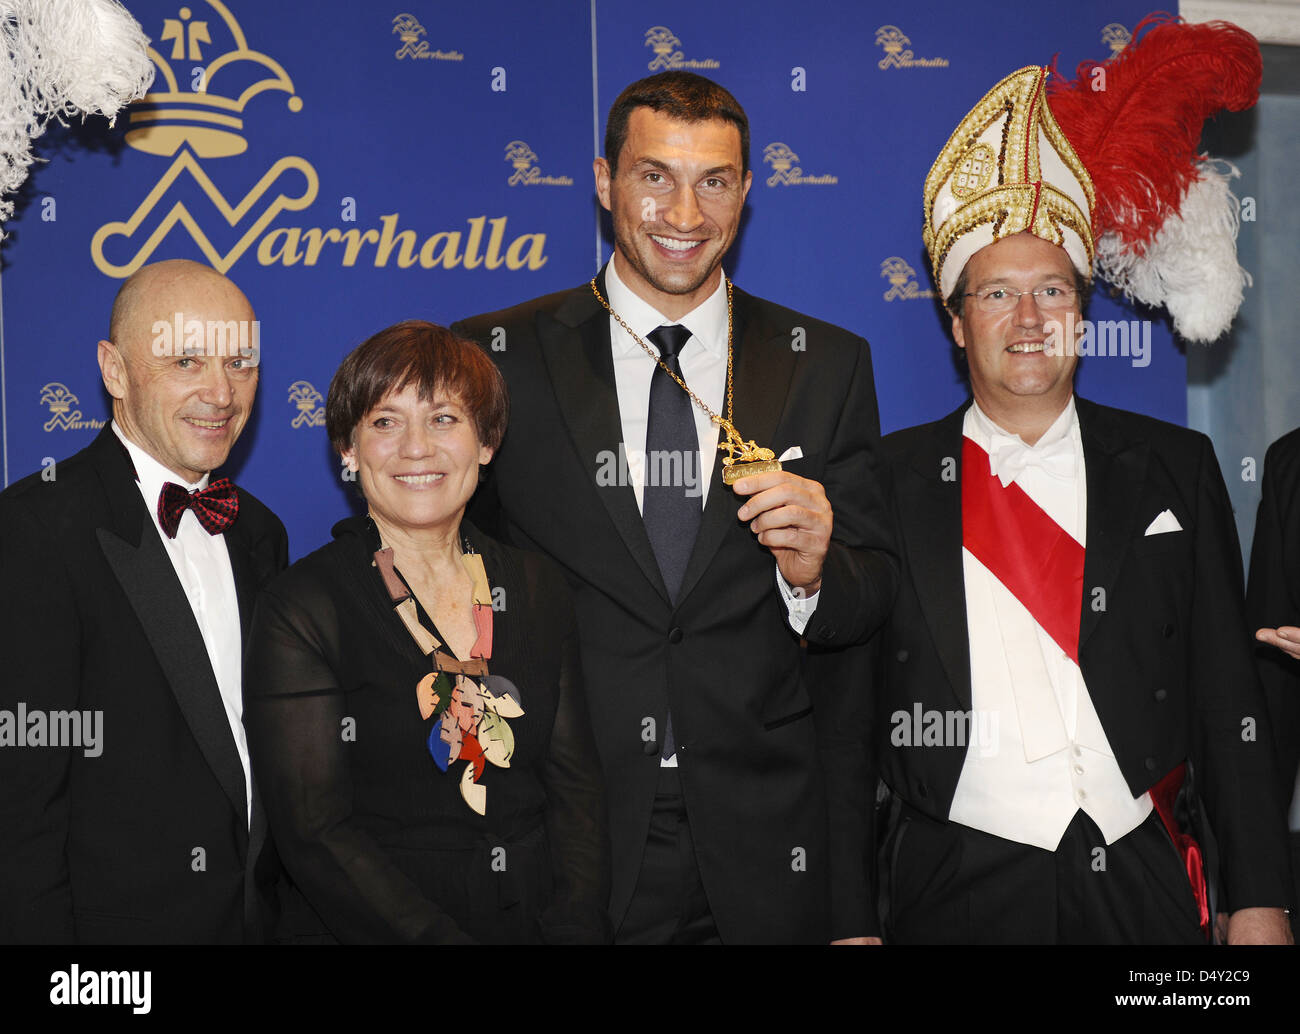 Christian Neureuther, Rosi Mittermaier, Wladimir Klitschko, guest at the Karl Valentin Orden awards at Bayerischer Hof hotel. Stock Photo